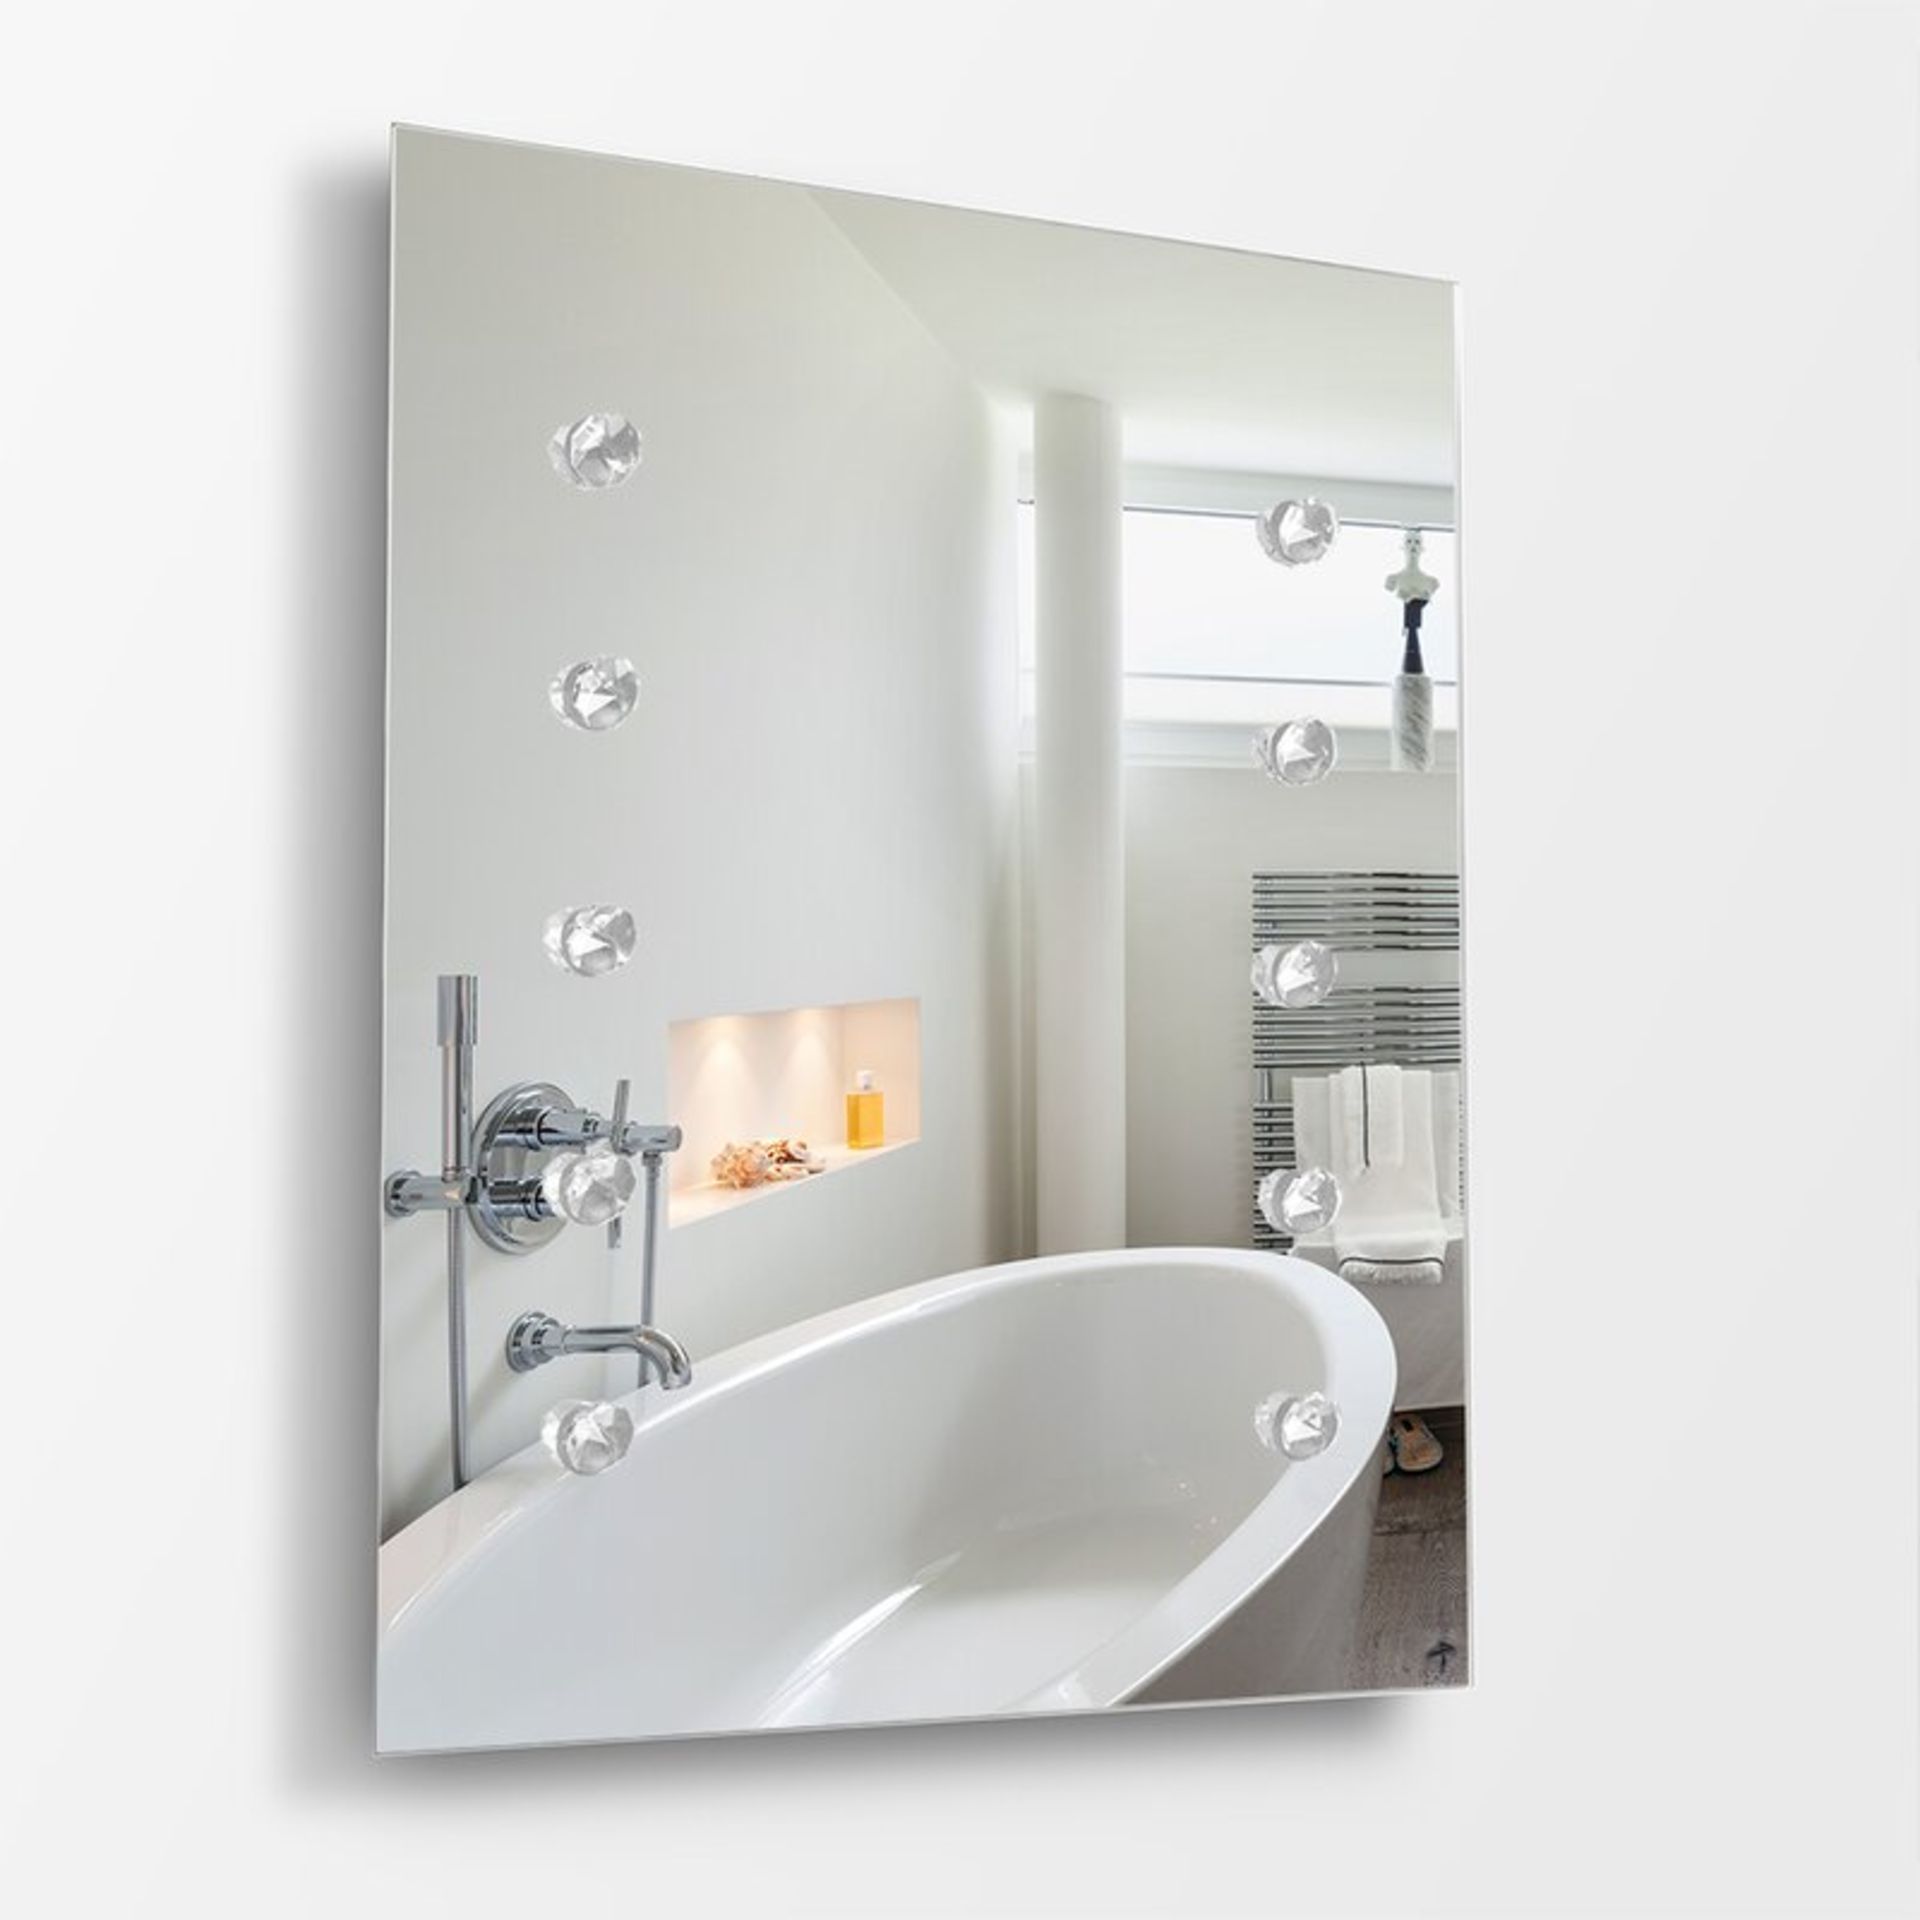 Gorman Bathroom Mirror - RRP £46.99